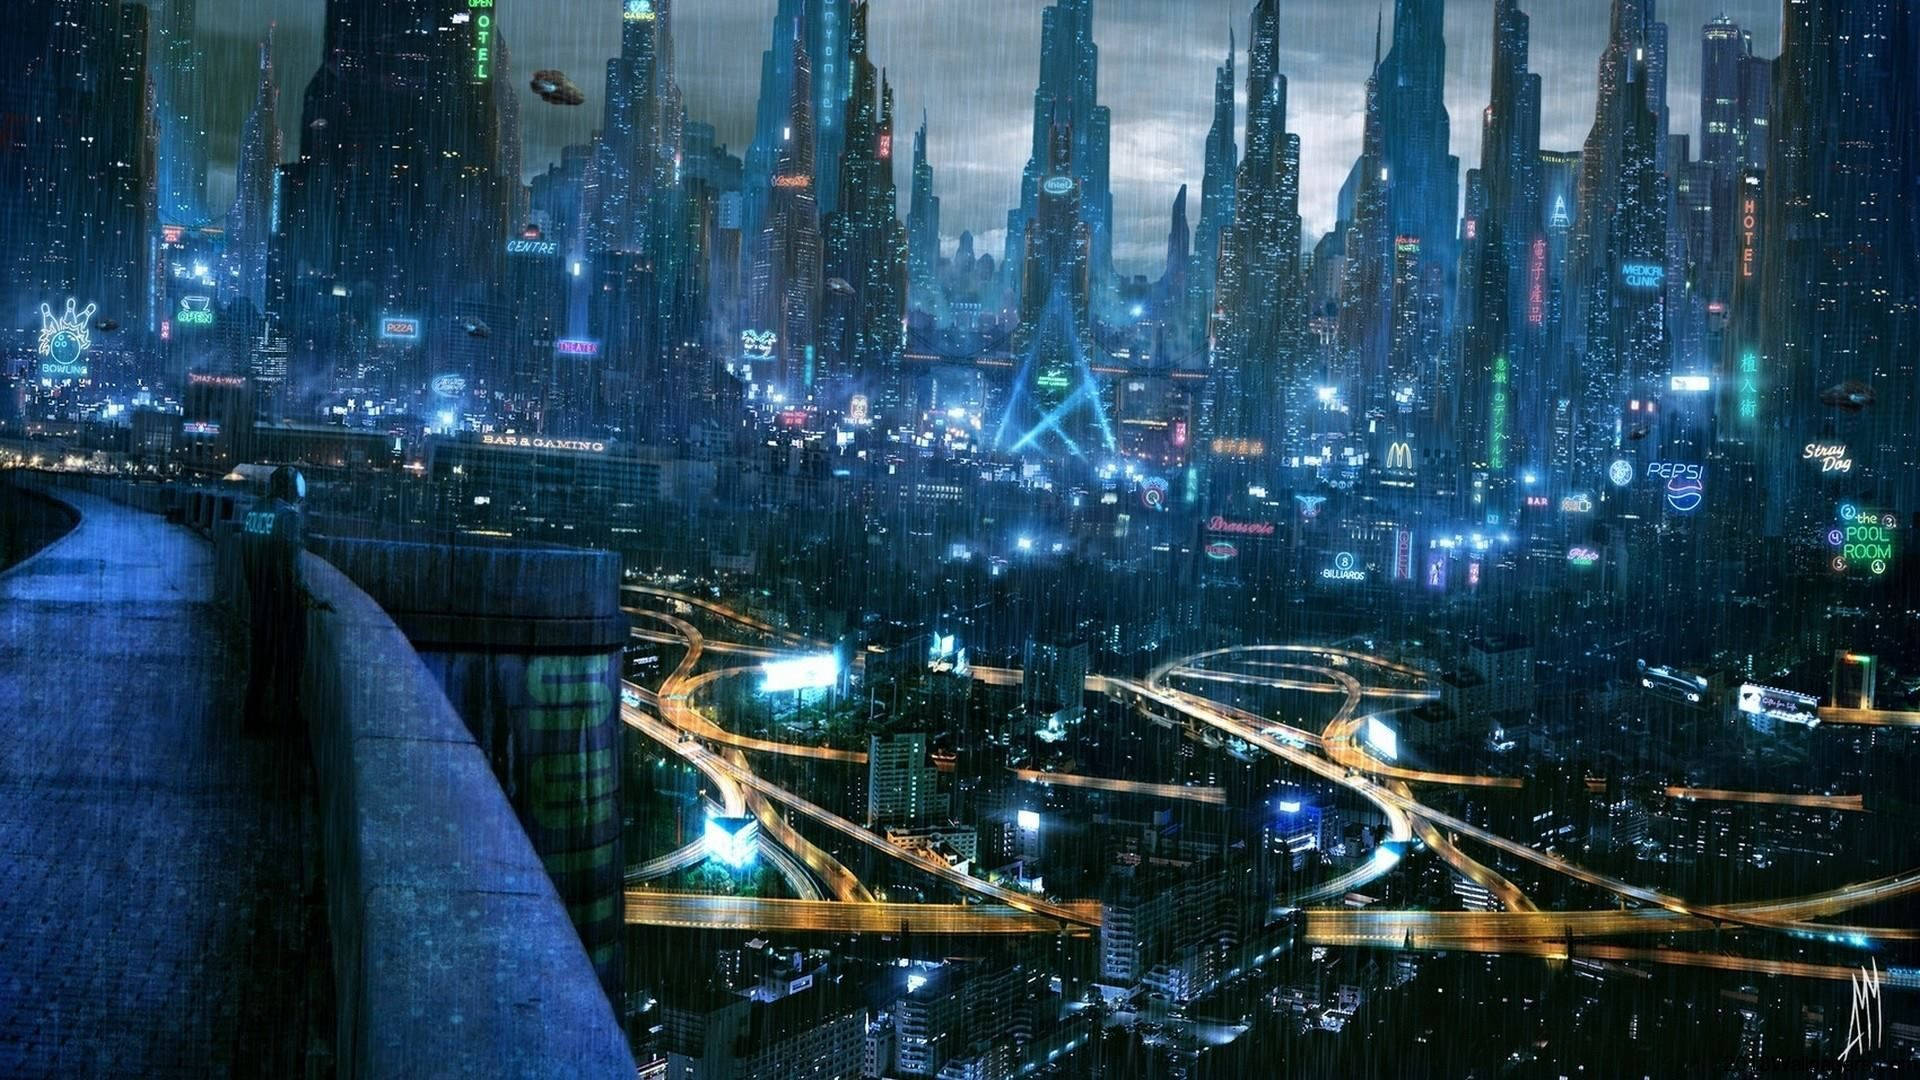 Cyberpunk City Fantasy Background